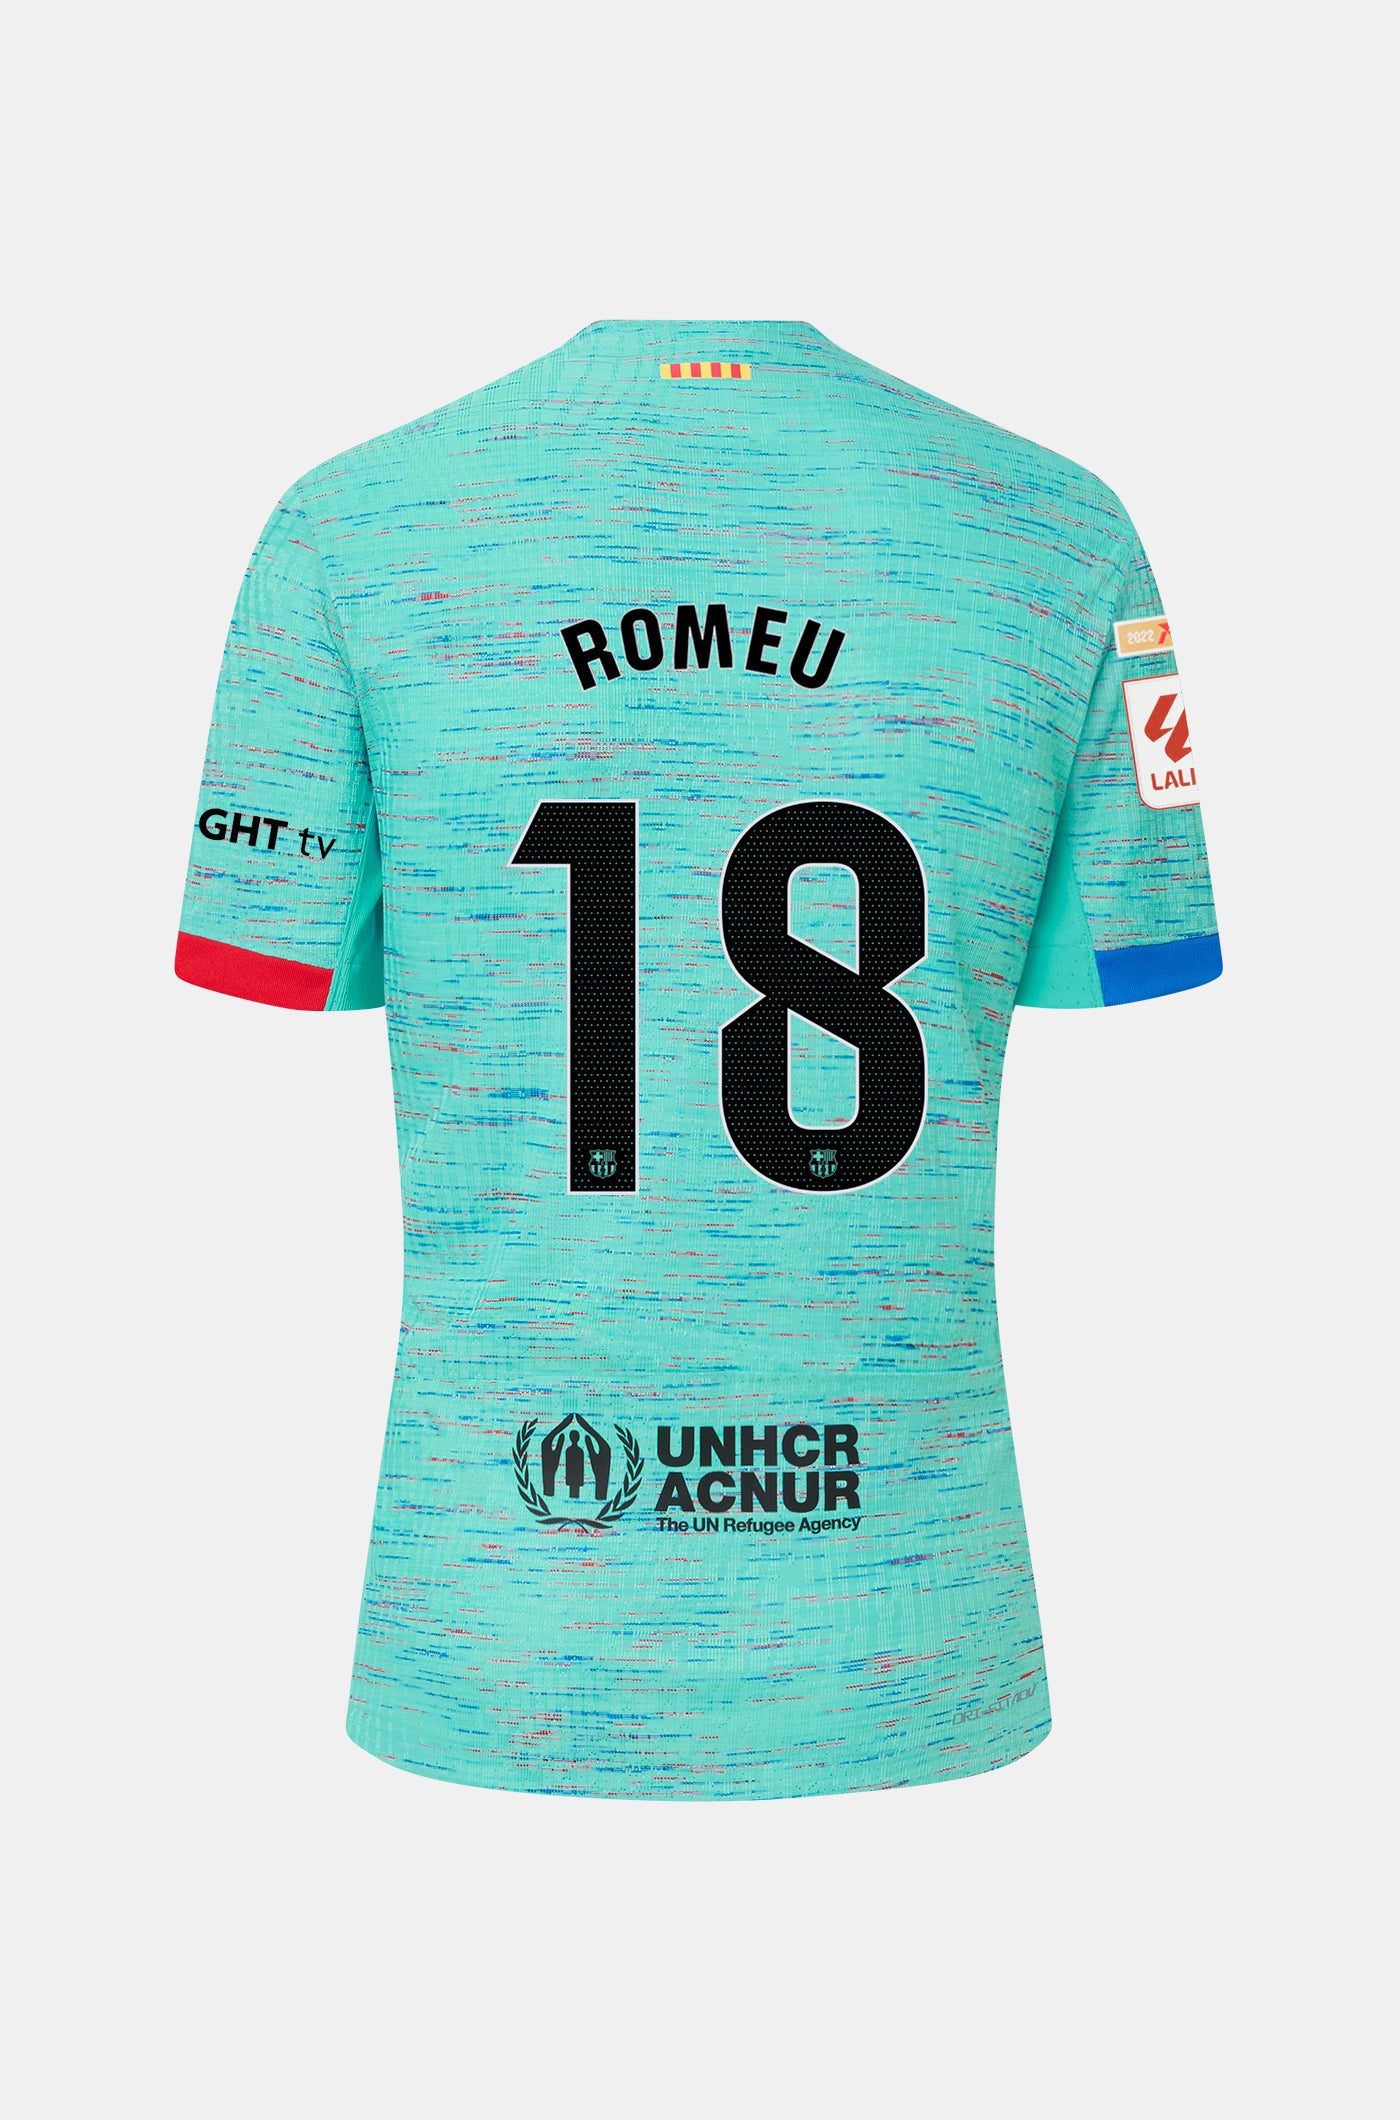 LFP FC Barcelona third shirt 23/24 Player’s Edition  - ROMEU